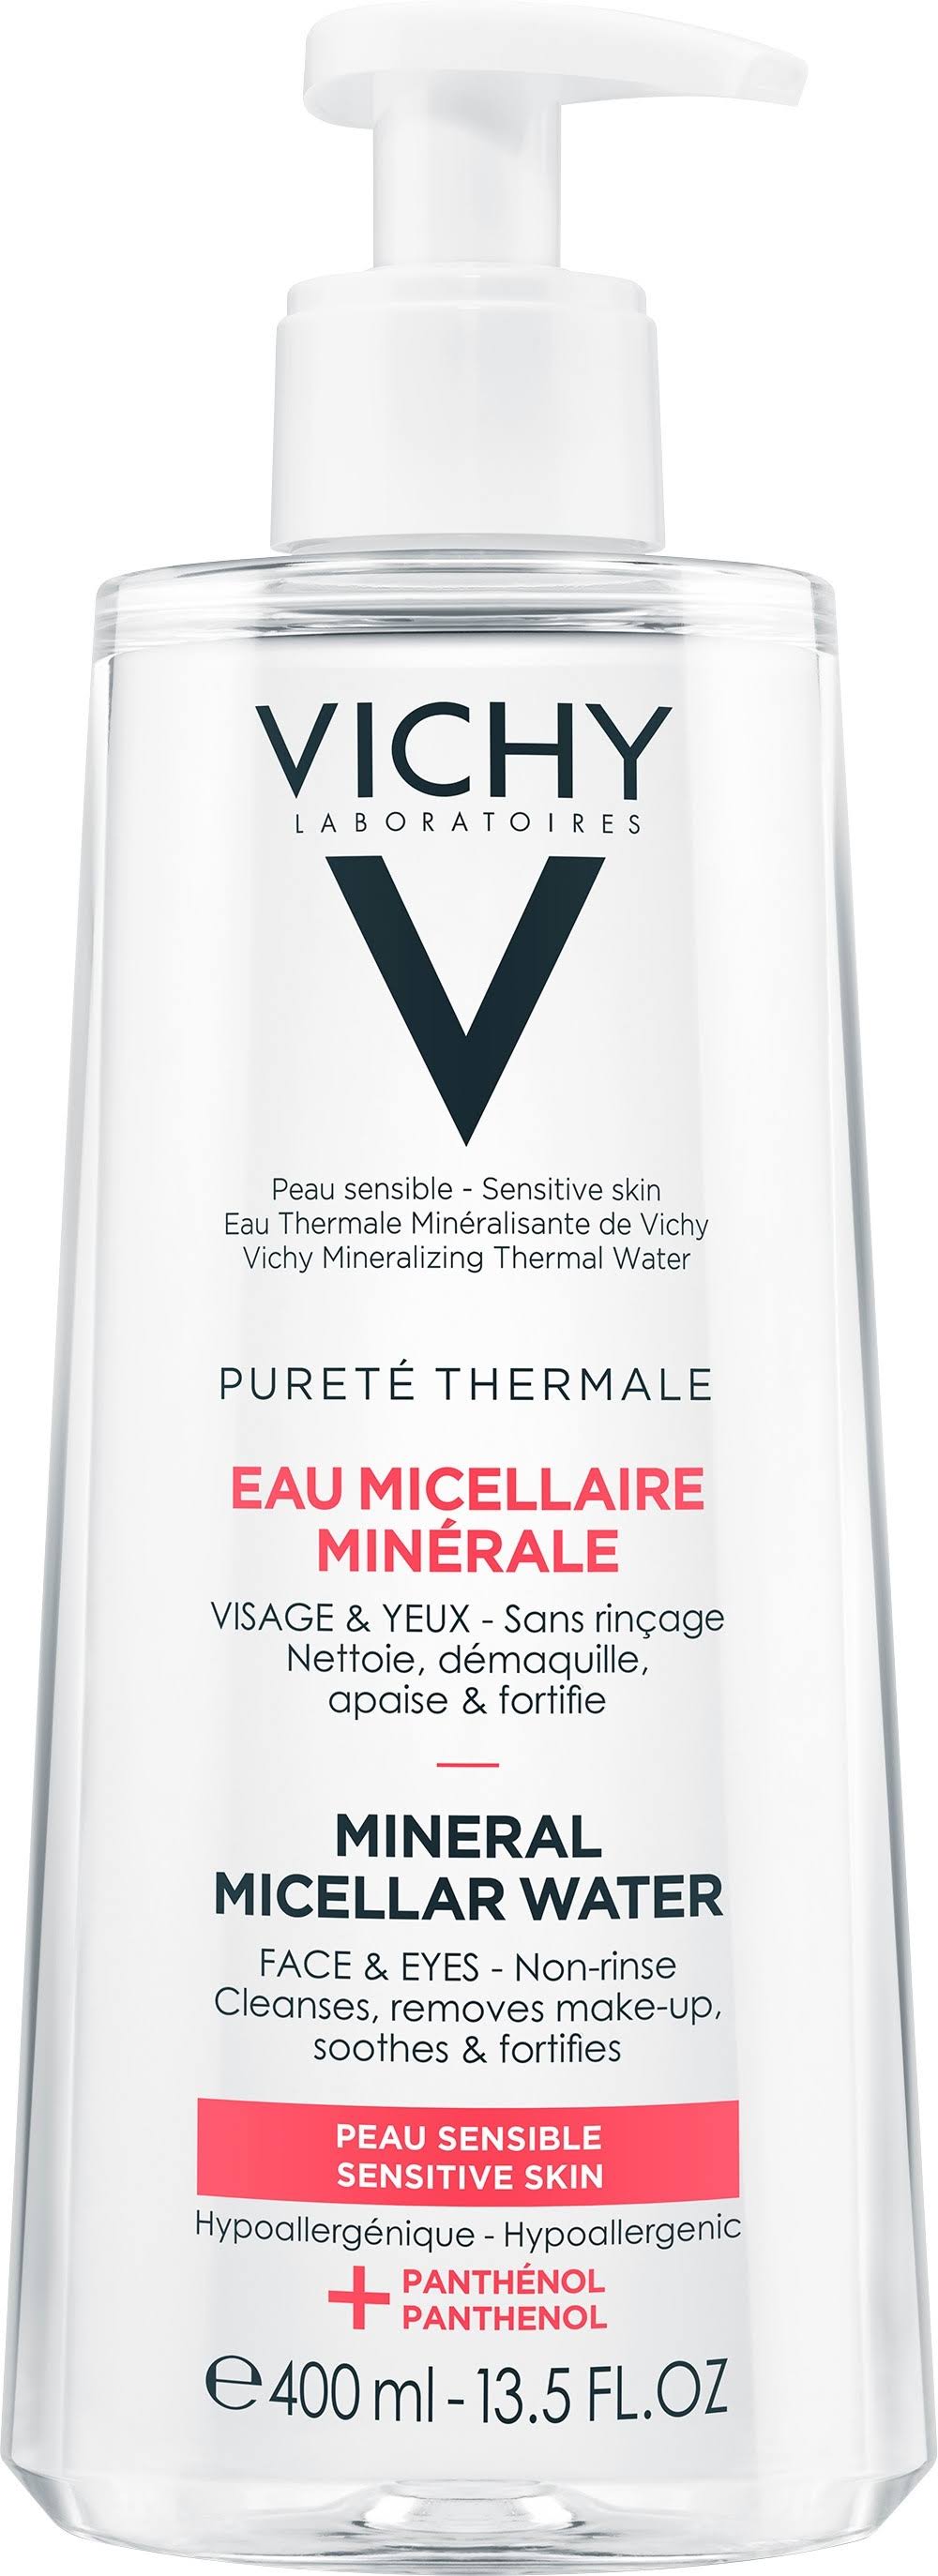 Vichy Pureté Thermale Micellar Water Sensitive Skin - 400ml